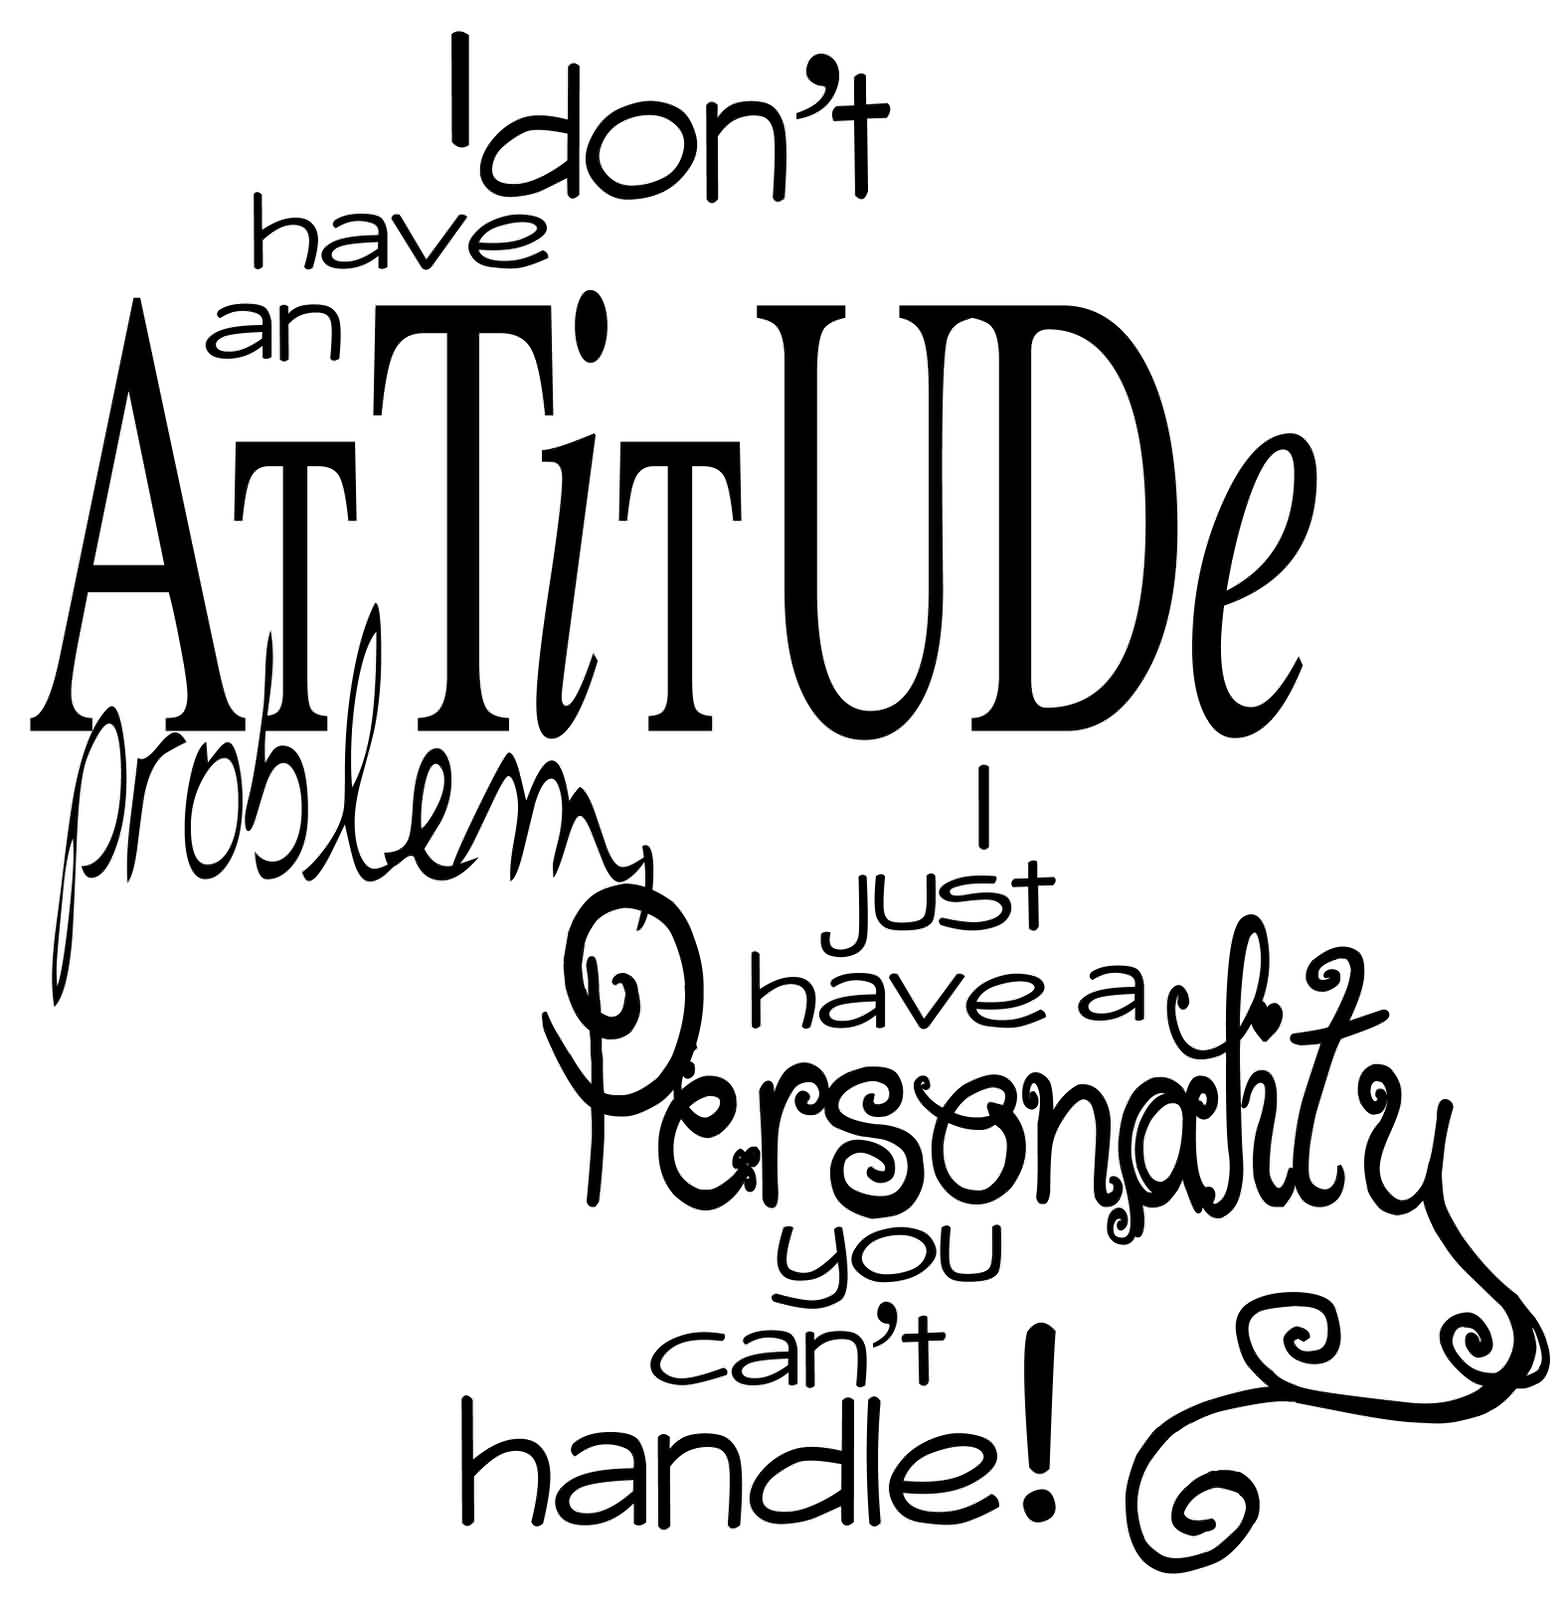 cool quotes on attitude tumblr